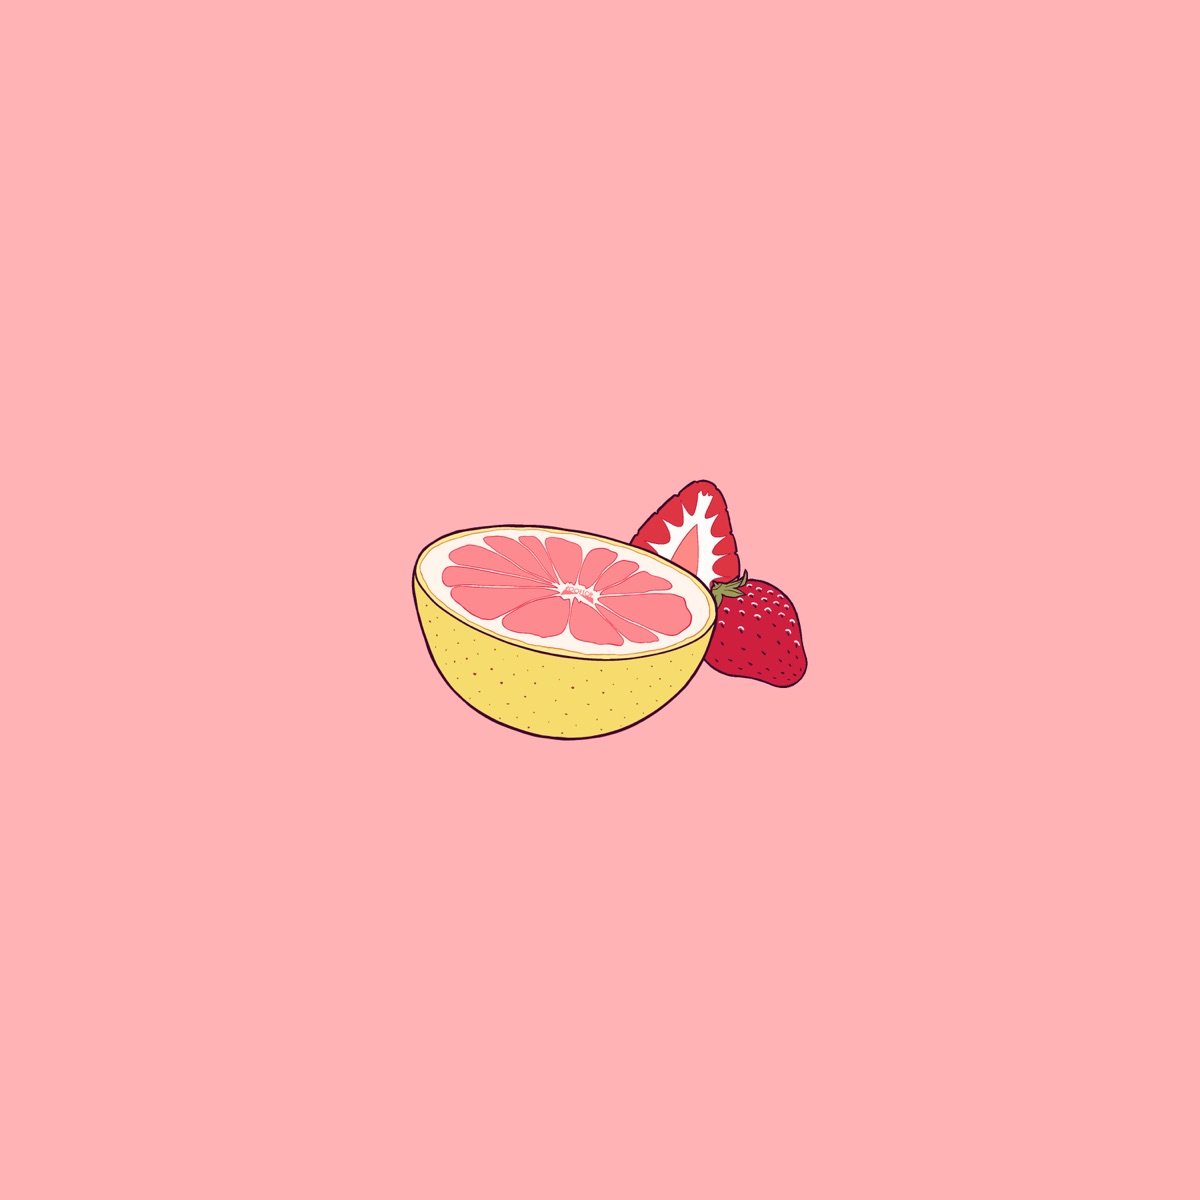 『Rin音 feat. asmi - Fruits』収録の『Fruits』ジャケット